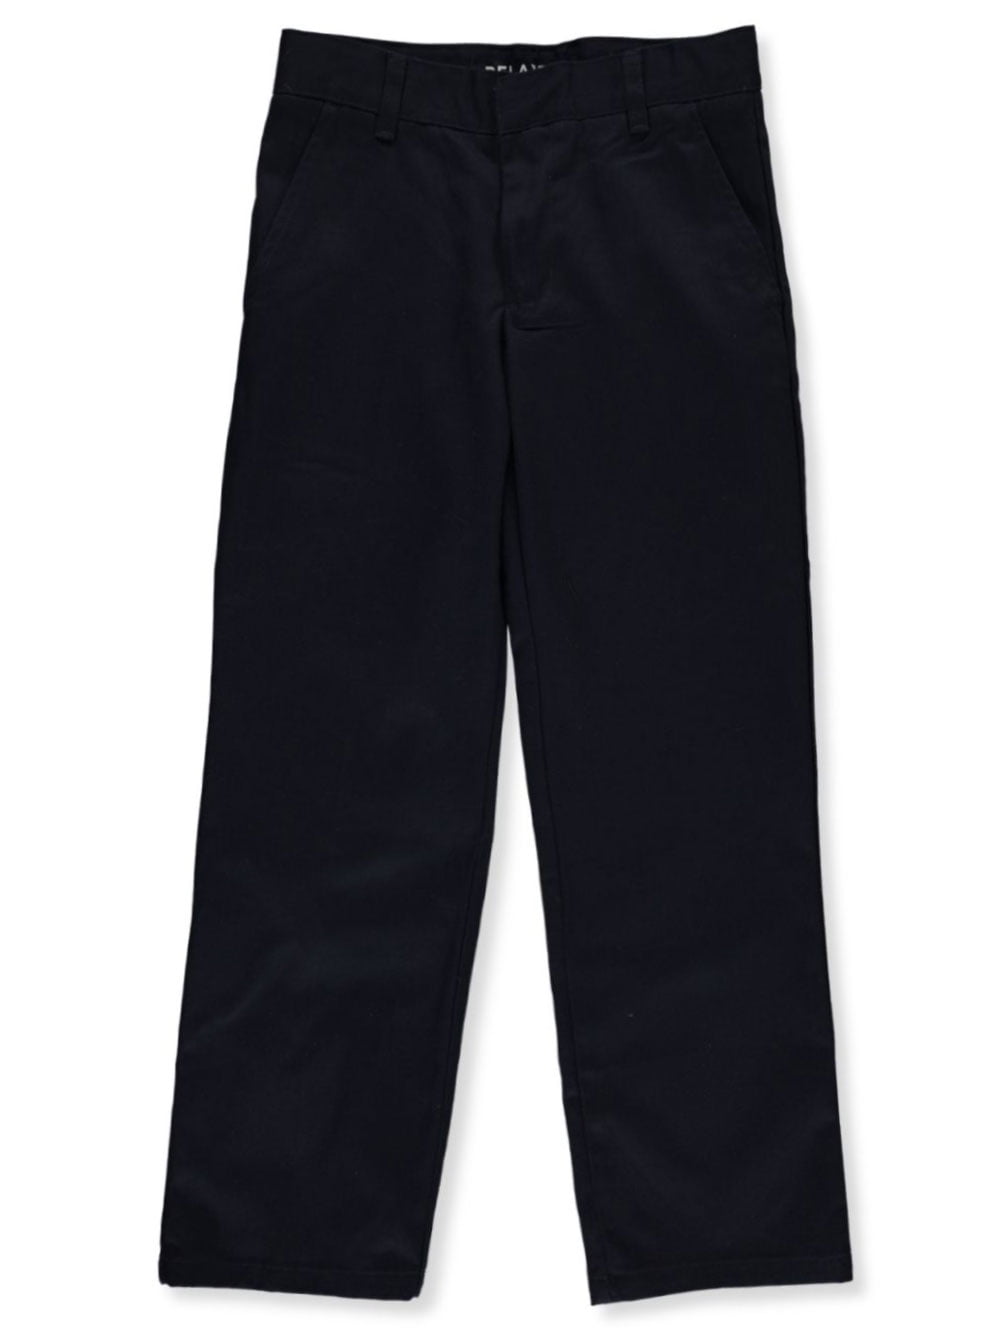 Boys Slim Fit Grey School Trousers | Woolworths.co.za